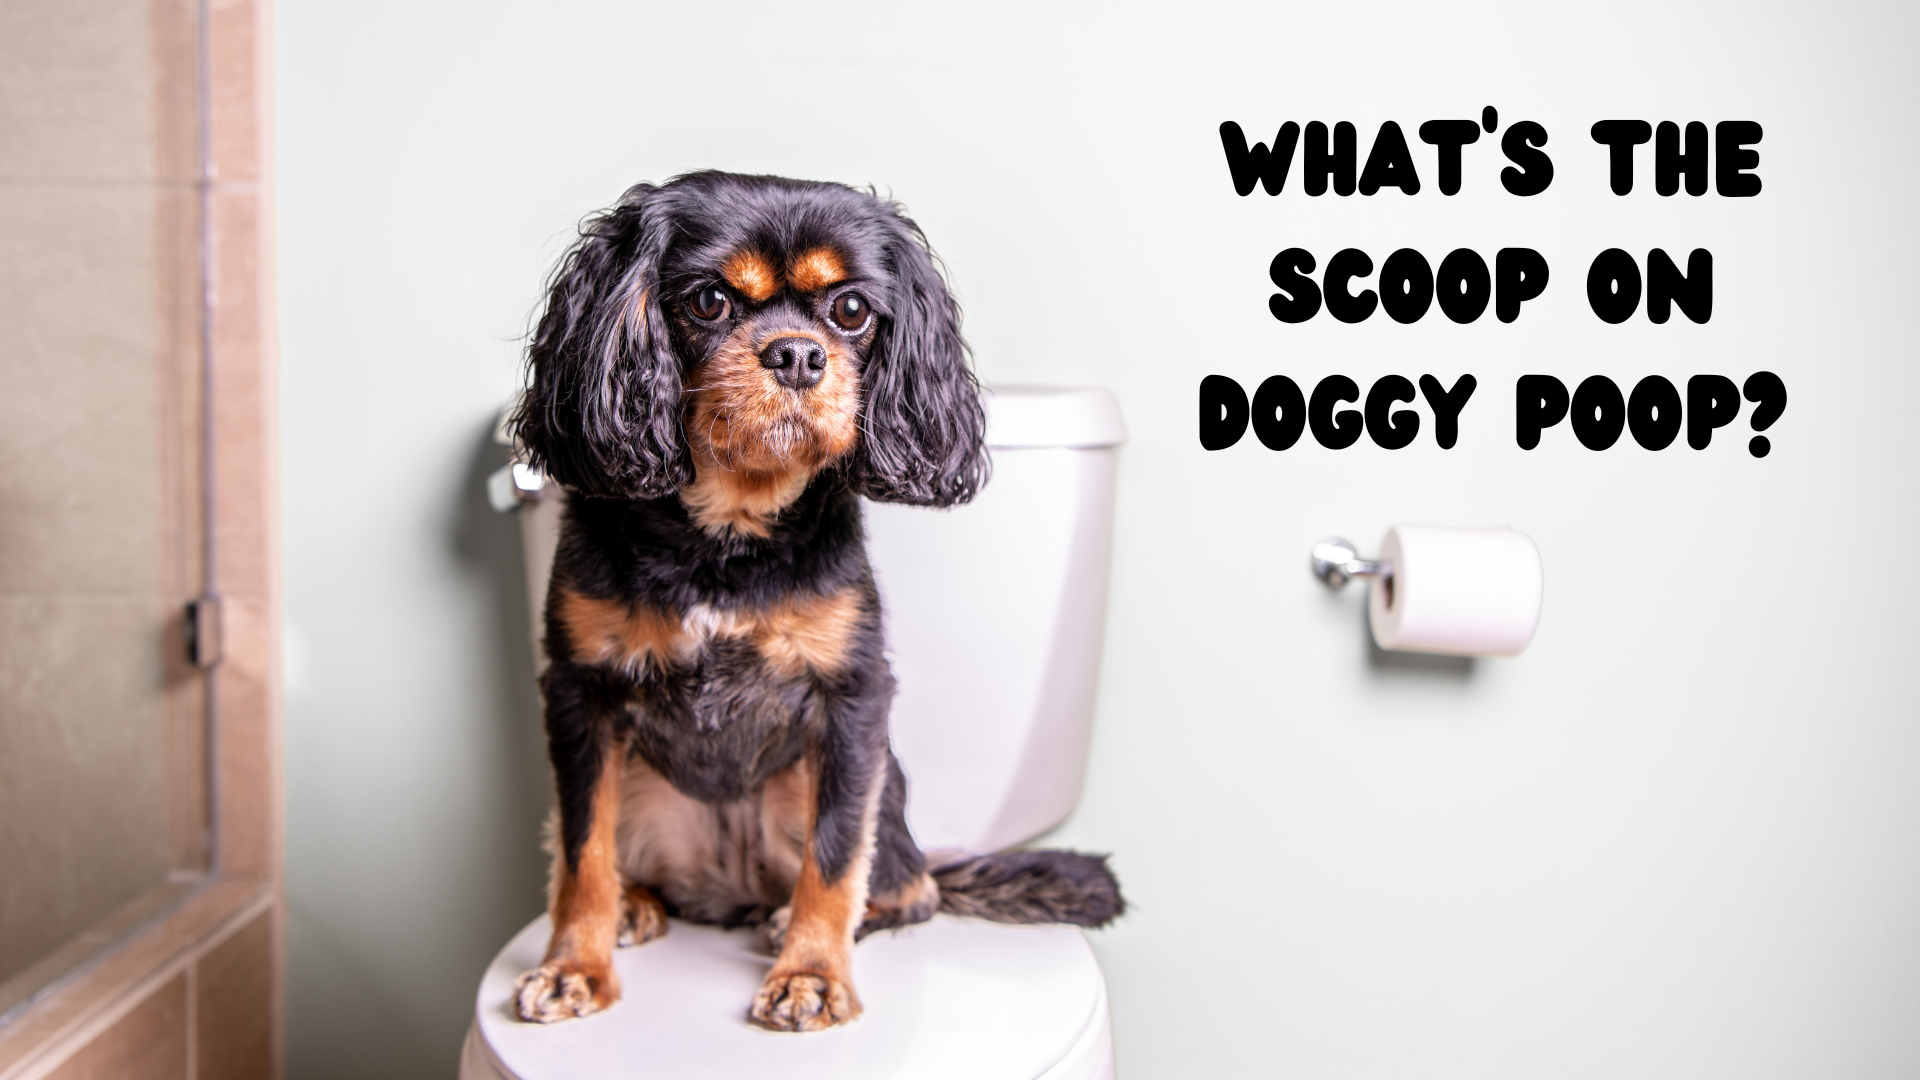 What does healthy dog poop look like?